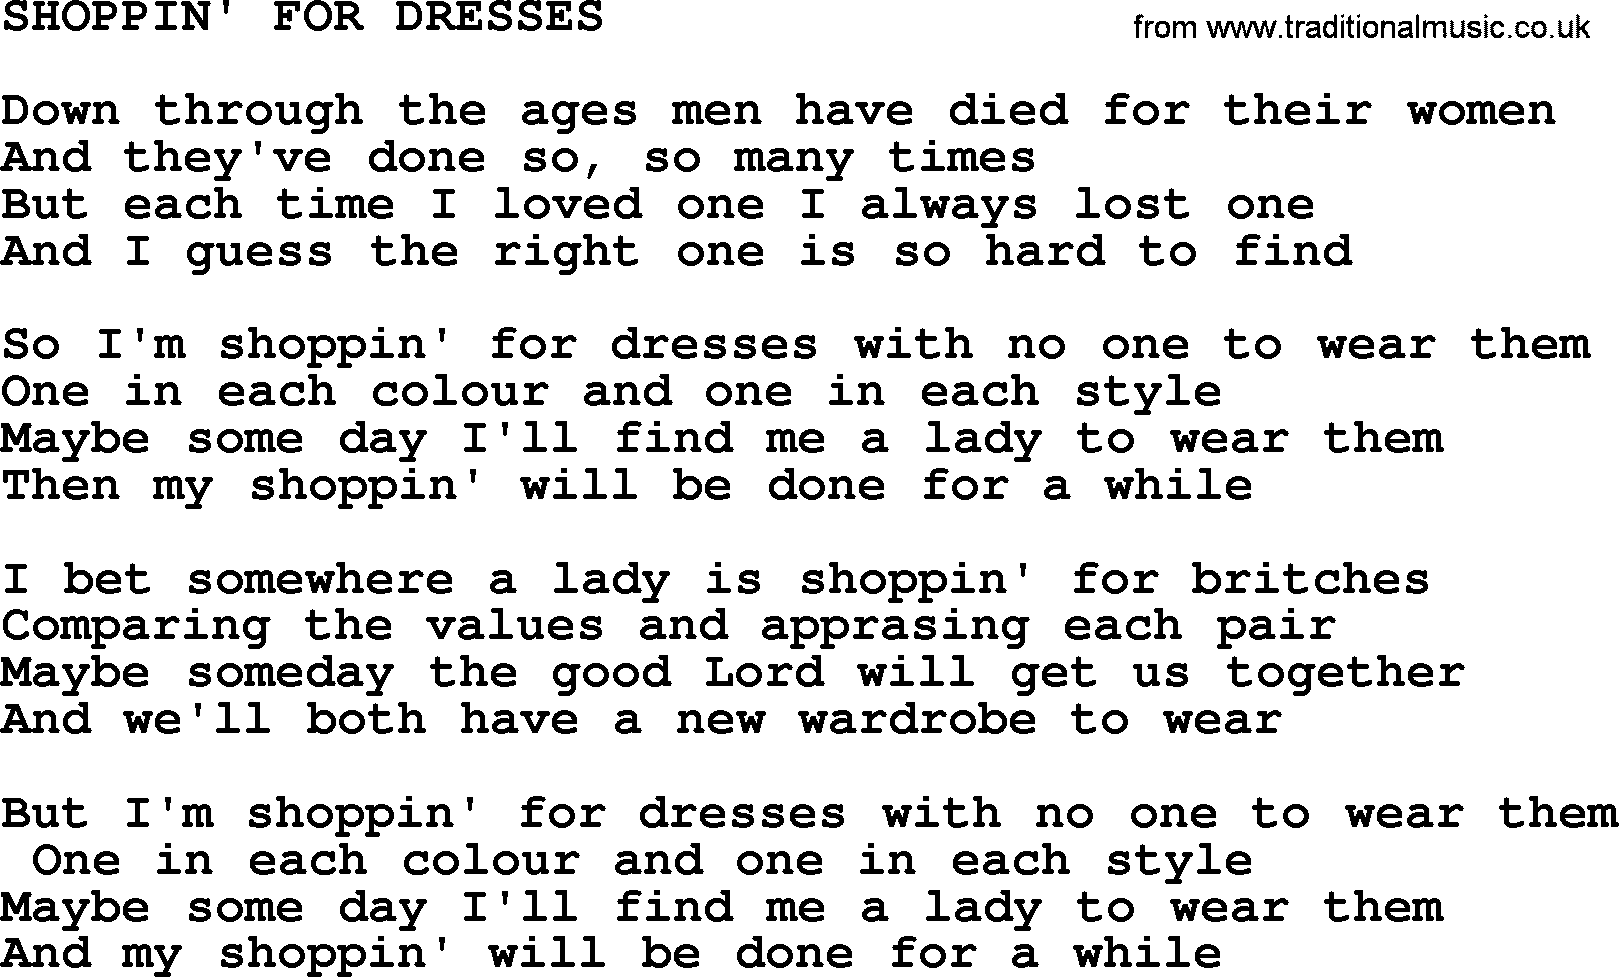 Merle Haggard song: Shoppin' For Dresses, lyrics.